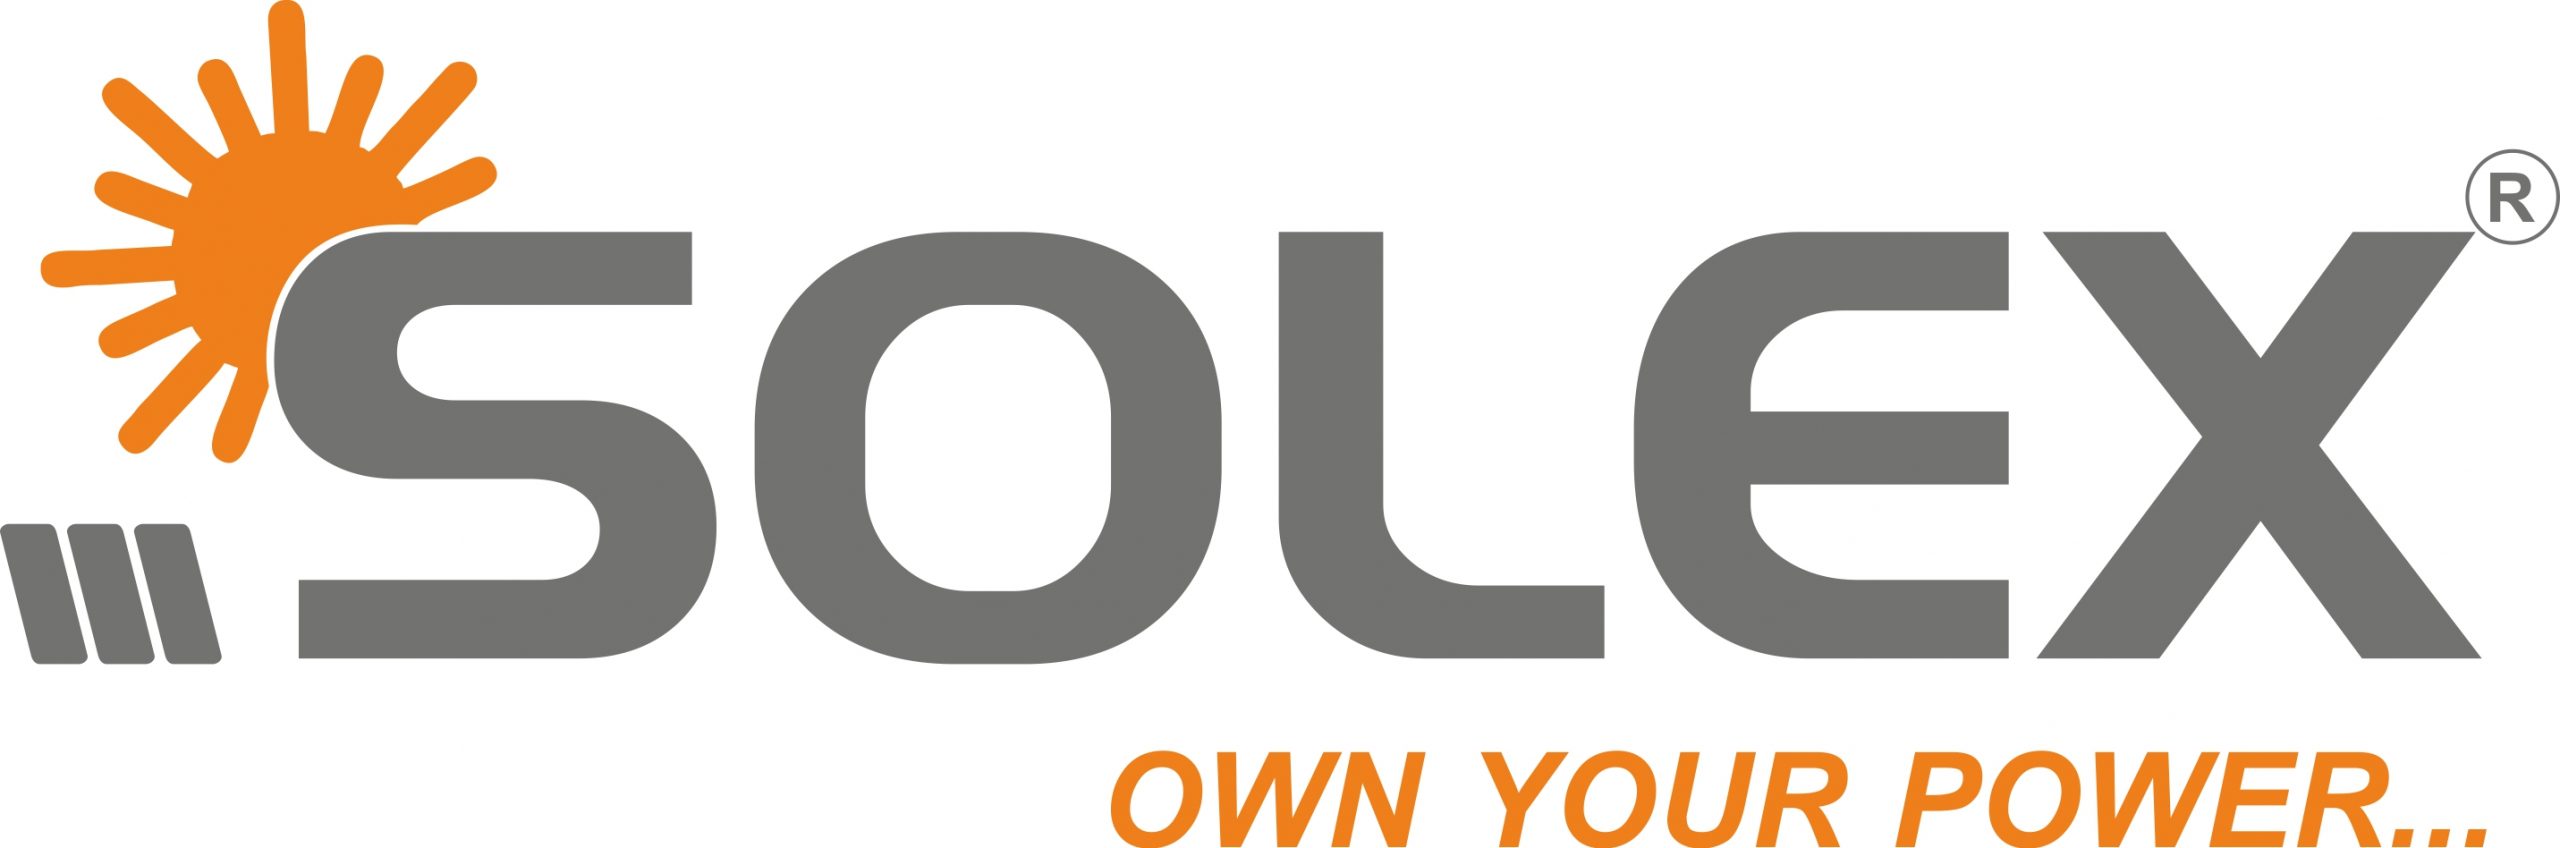 Solex Energy Ltd is the 2nd most trustworthy Solar EPC Company